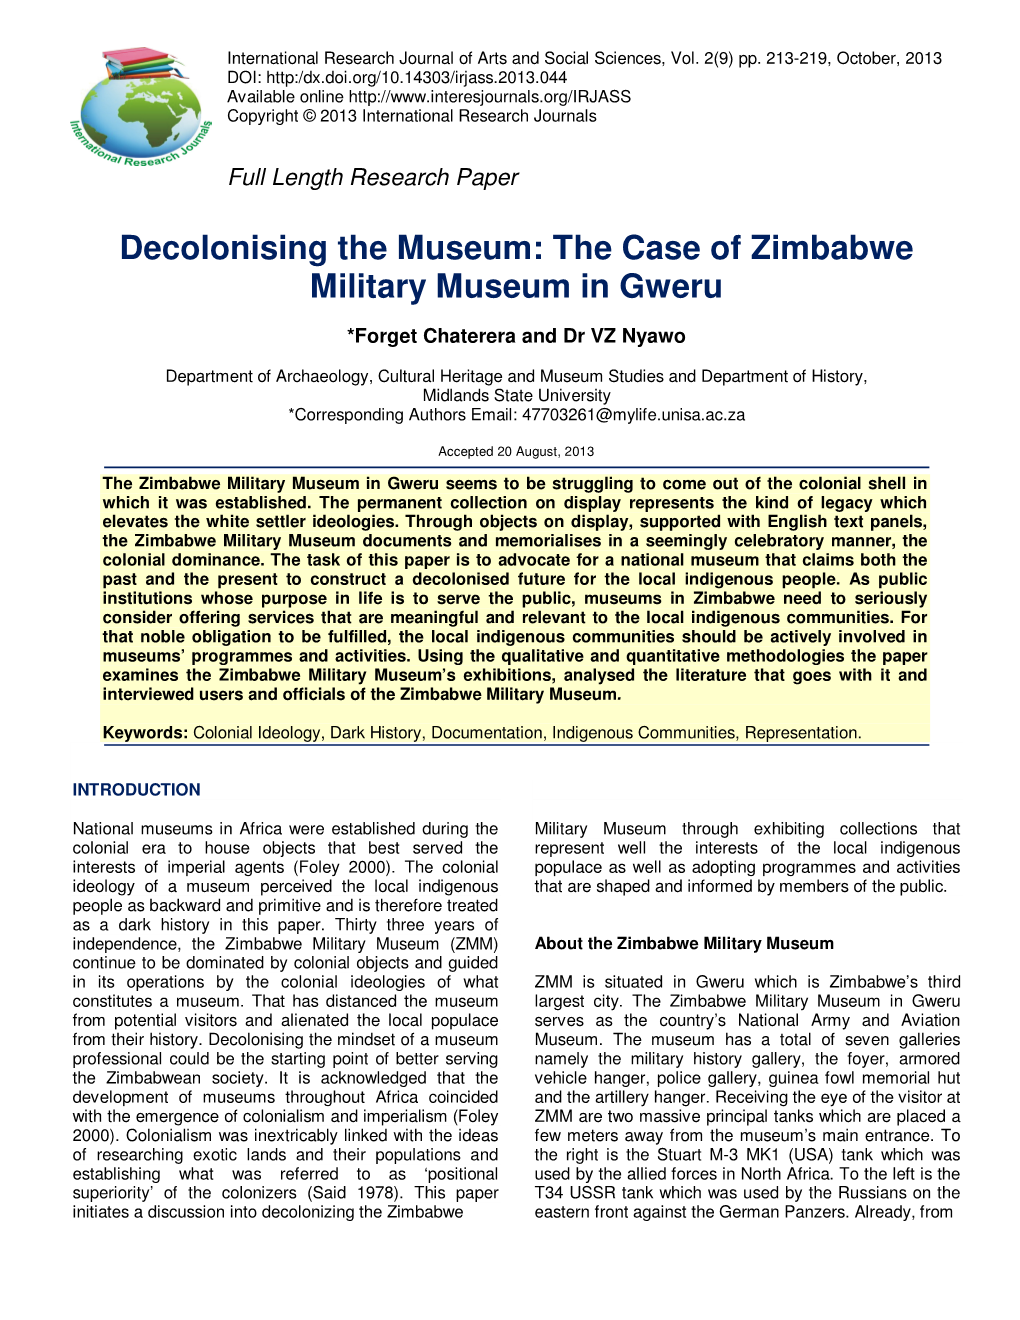 The Case of Zimbabwe Military Museum in Gweru